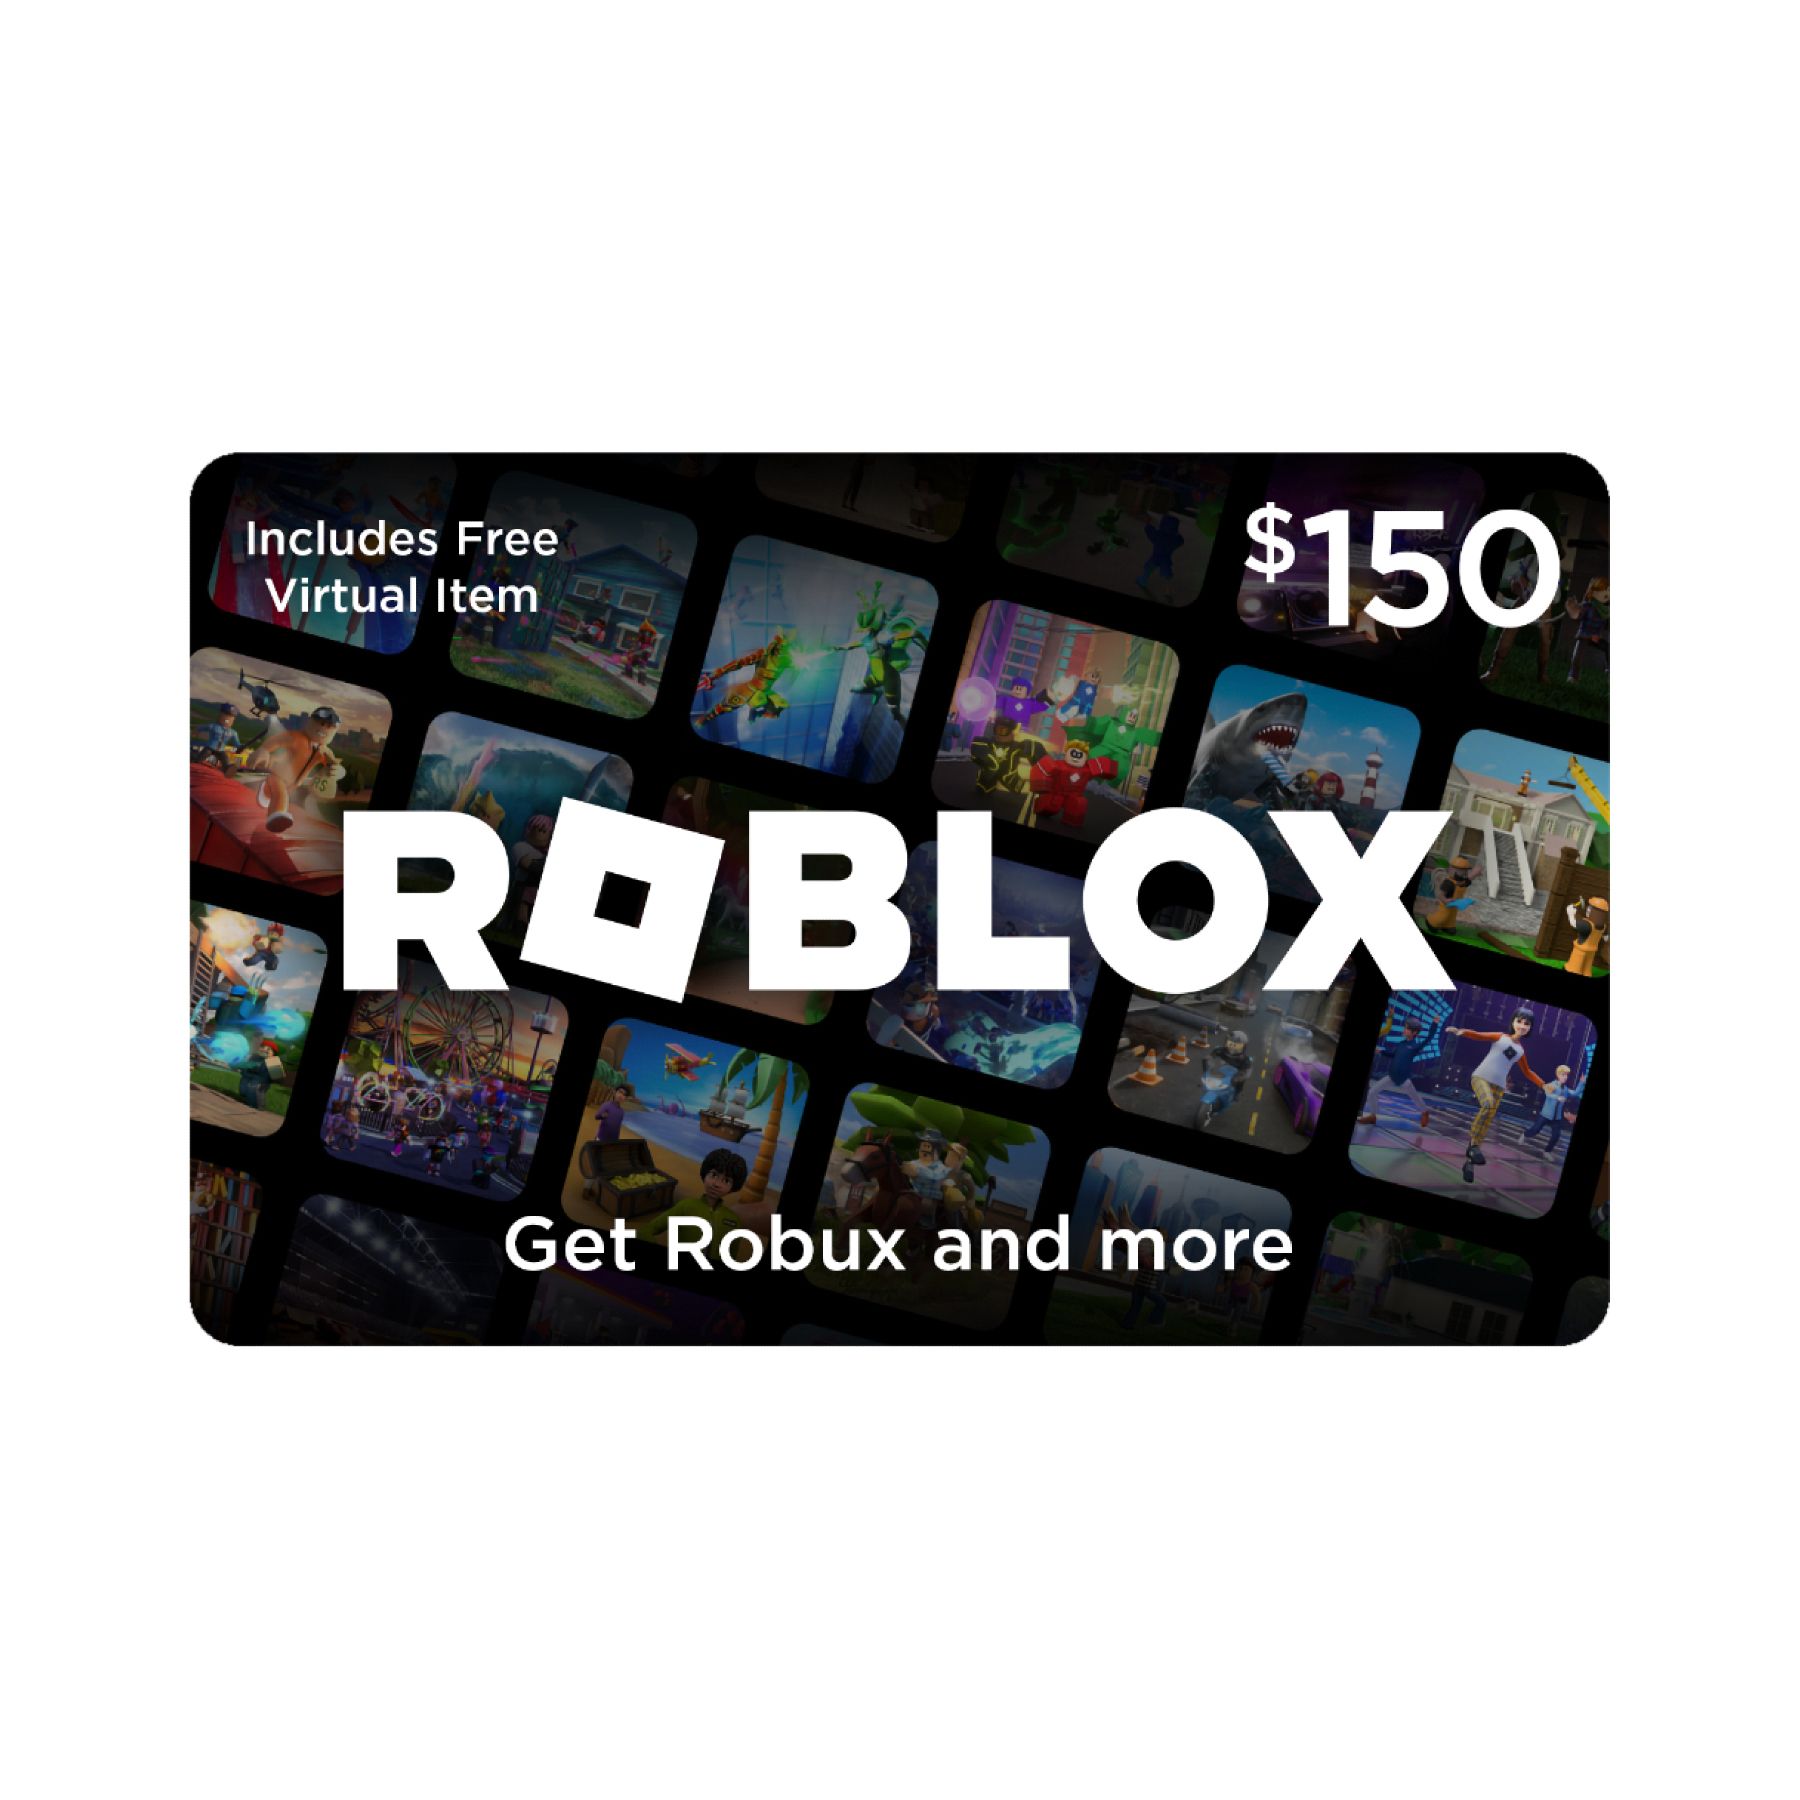 Roblox - Investor Relations